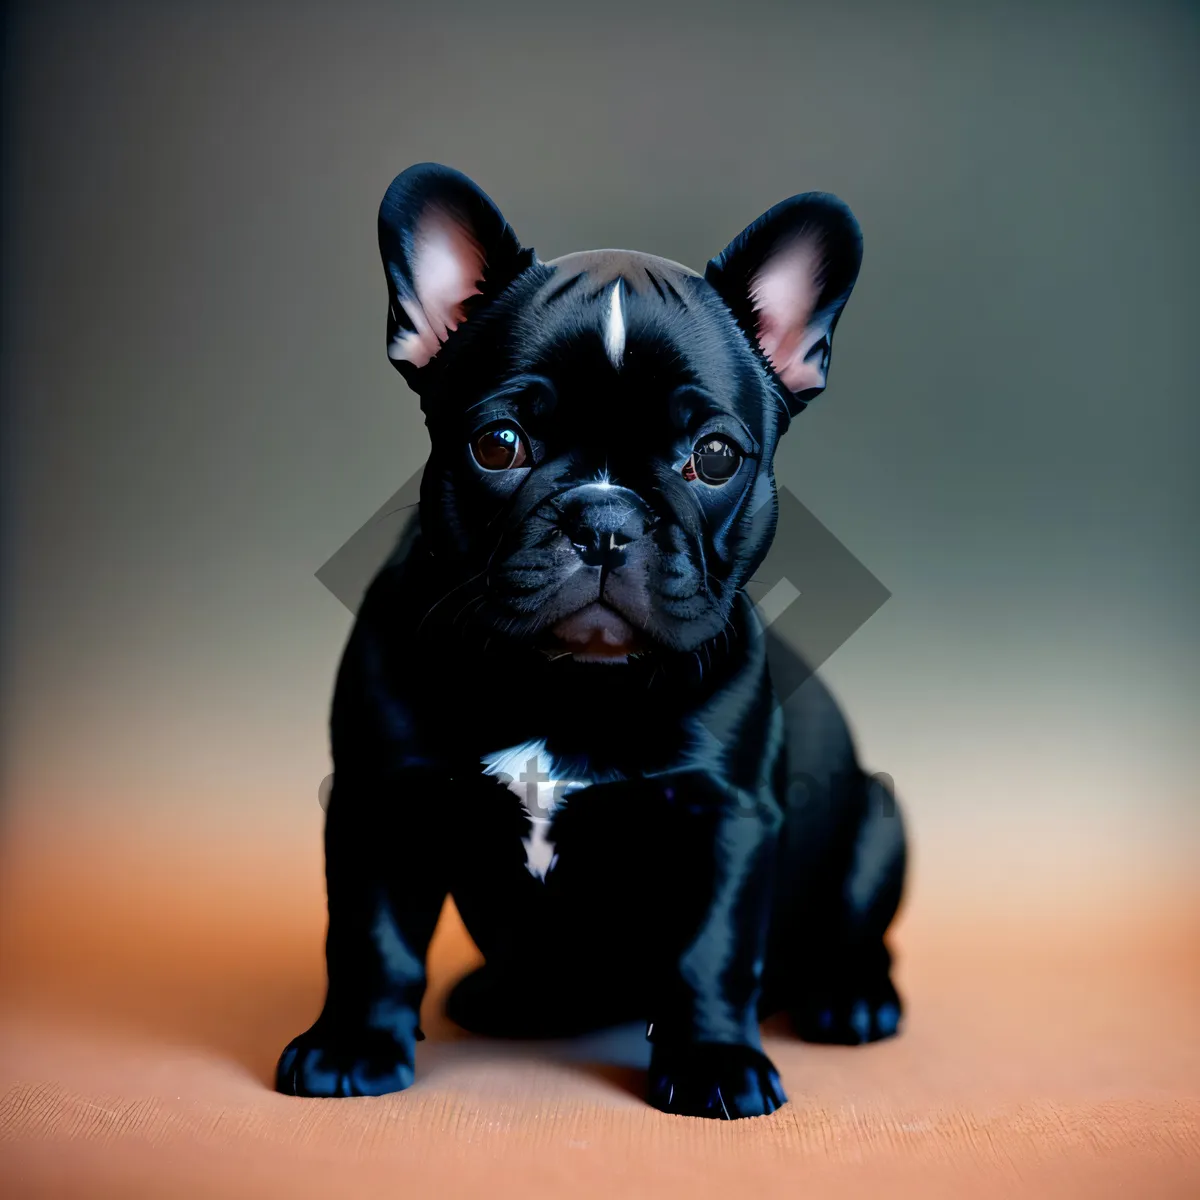 Picture of Captivating Portrait of a Cute Purebred Bulldog Puppy